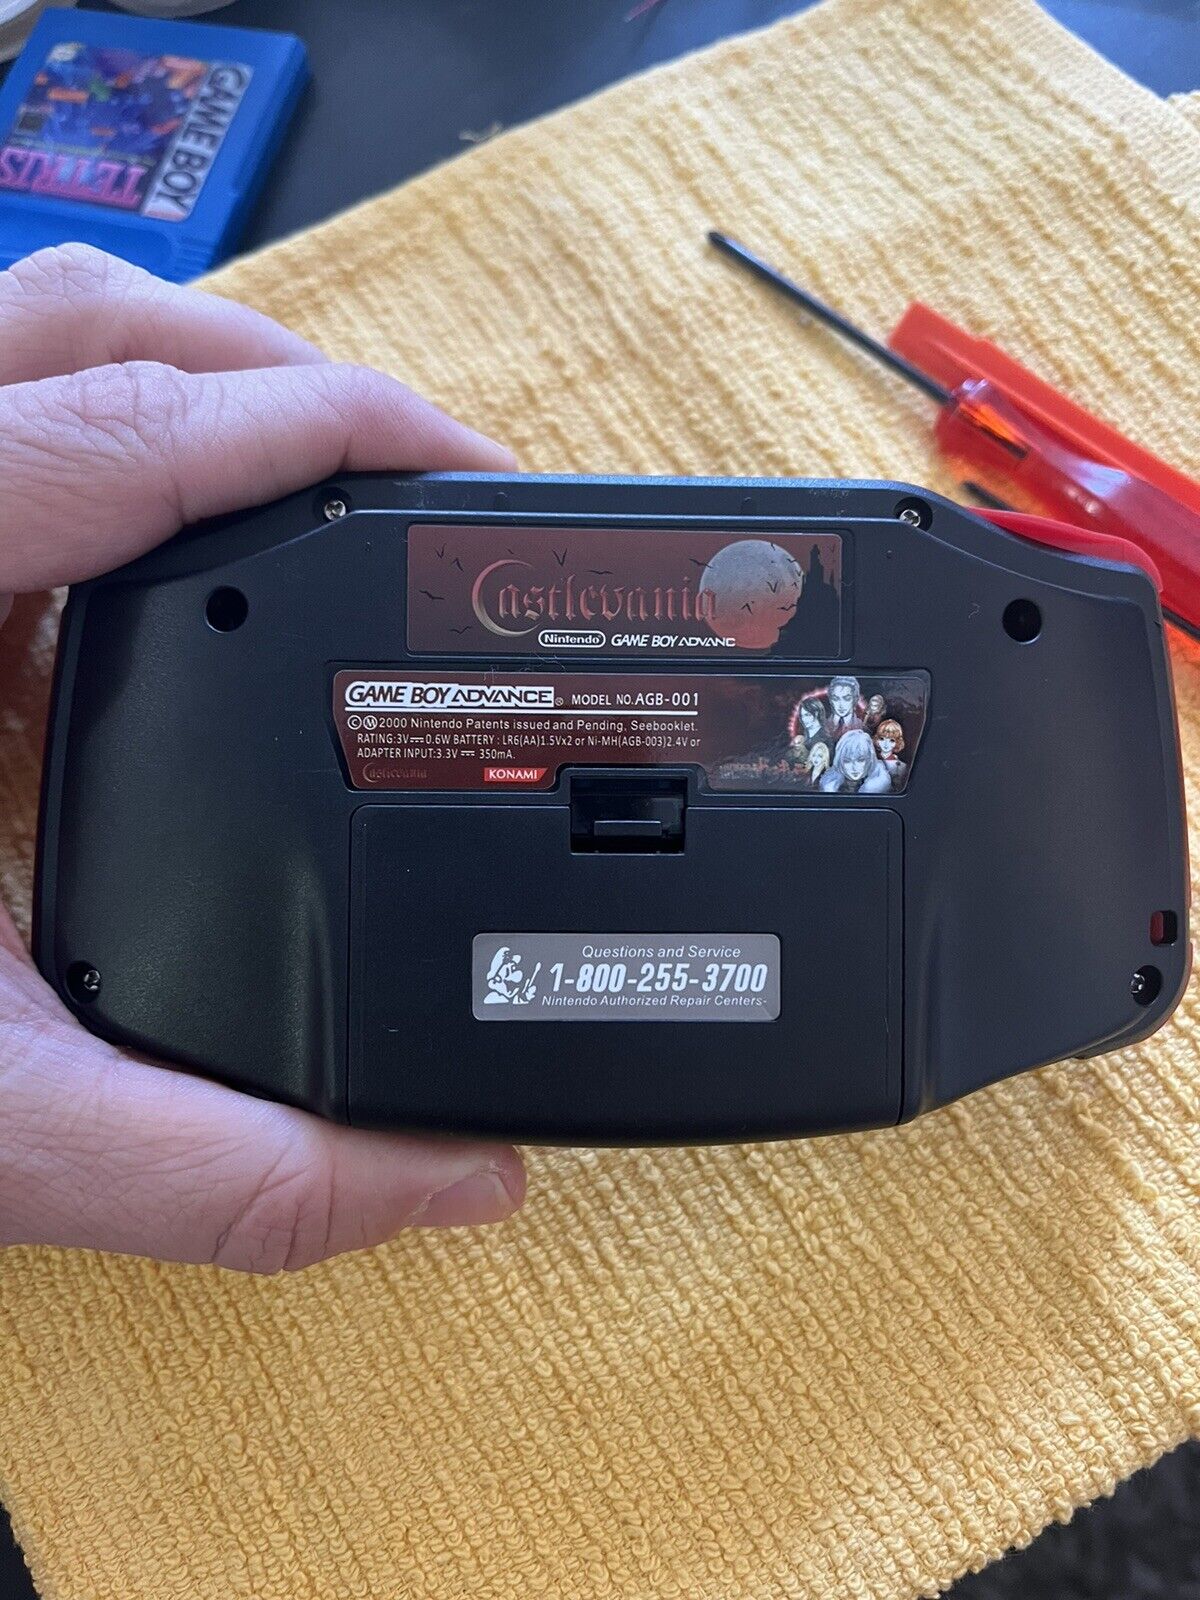 Castlevania Backlit IPS Nintendo Gameboy Advance Console GBA Cartridge V2 Nintendo gameboy advance - фотография #3